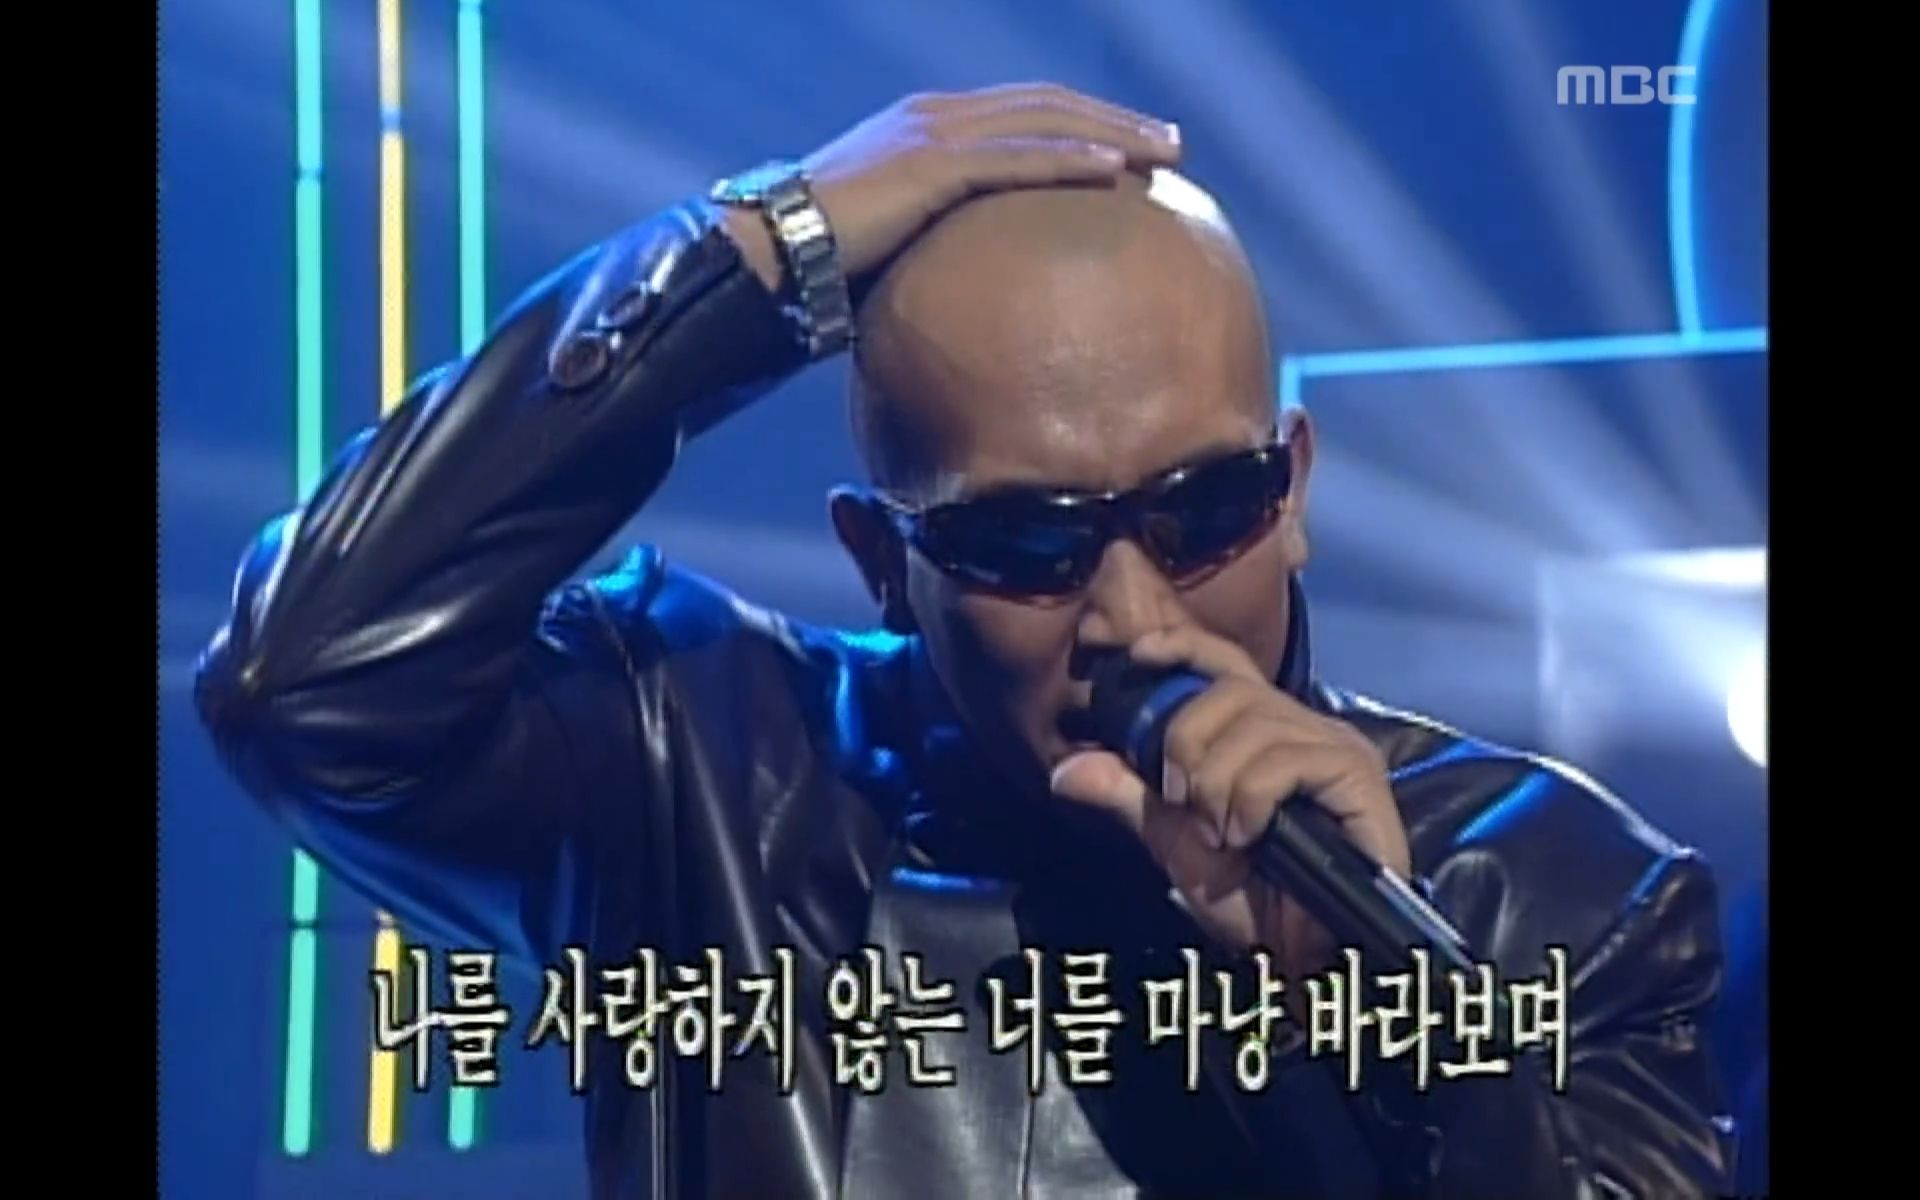 Clon (酷龙) - Bing bing bing (绕绕绕) - MBC Top Music 超清现场 - 19970913